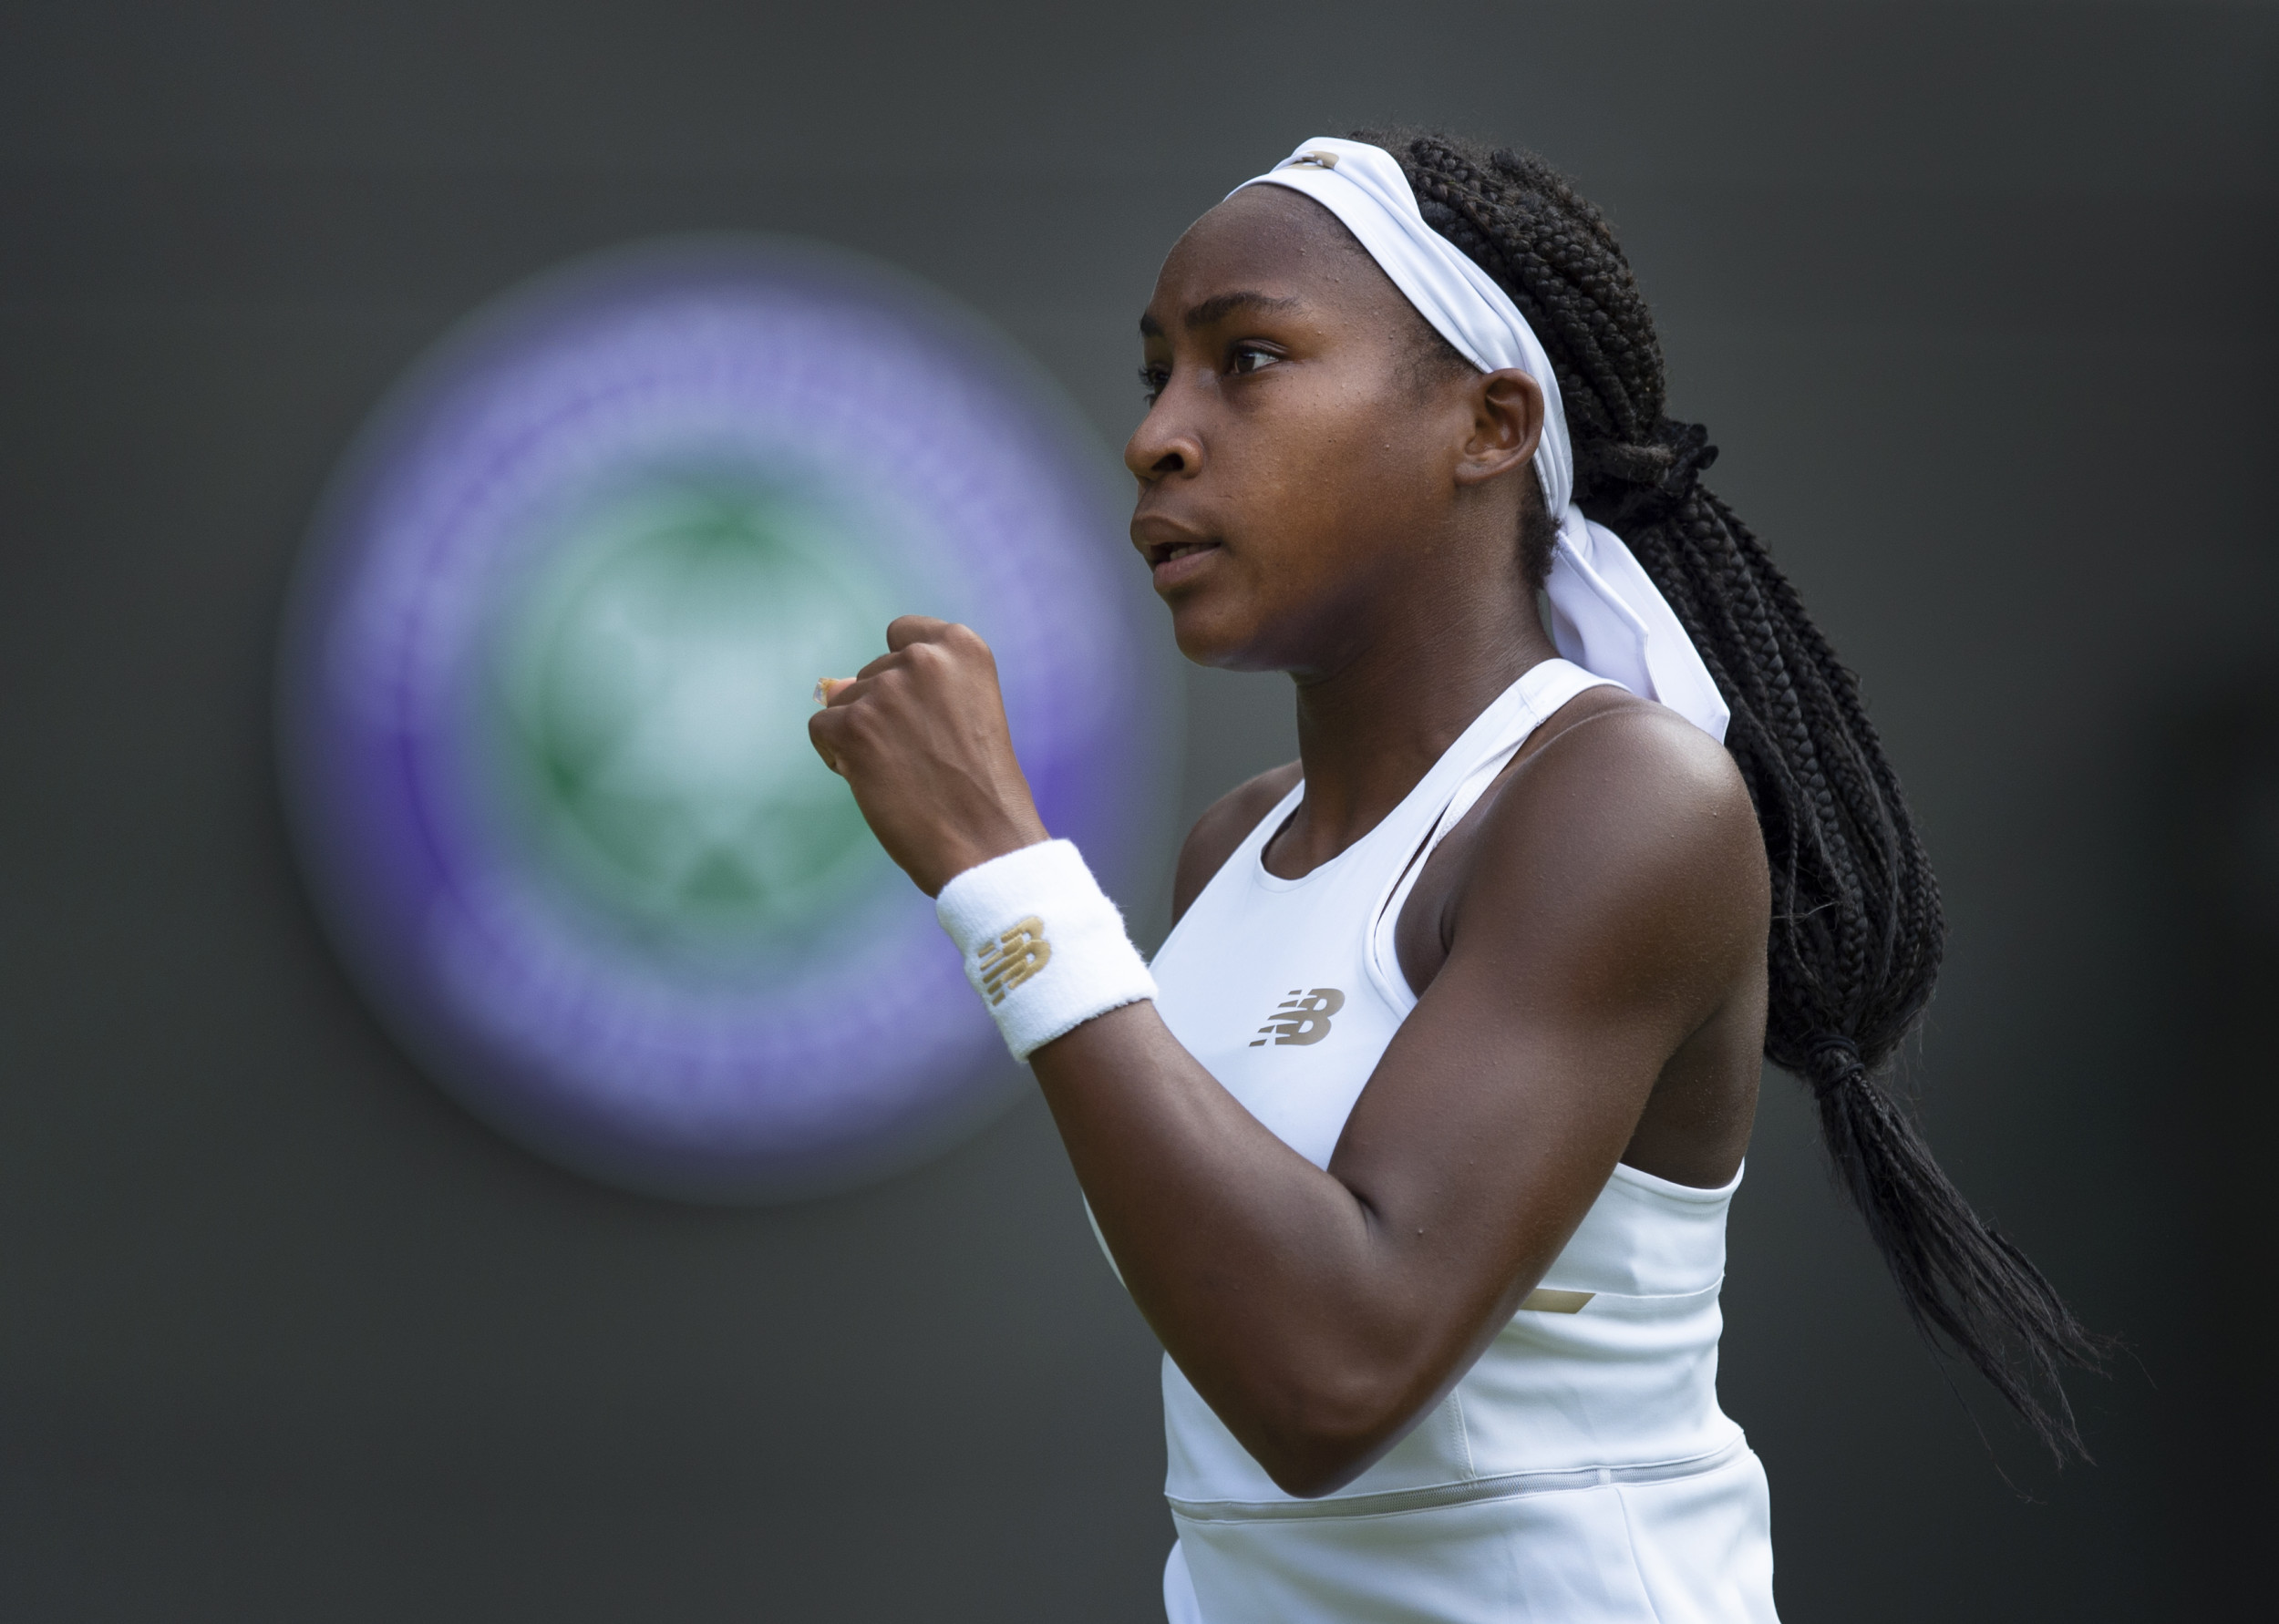 Wimbledon 2019 How to Watch Cori Coco Gauff, Novak Djokovic Second-round Matches, Start Times, Live Stream